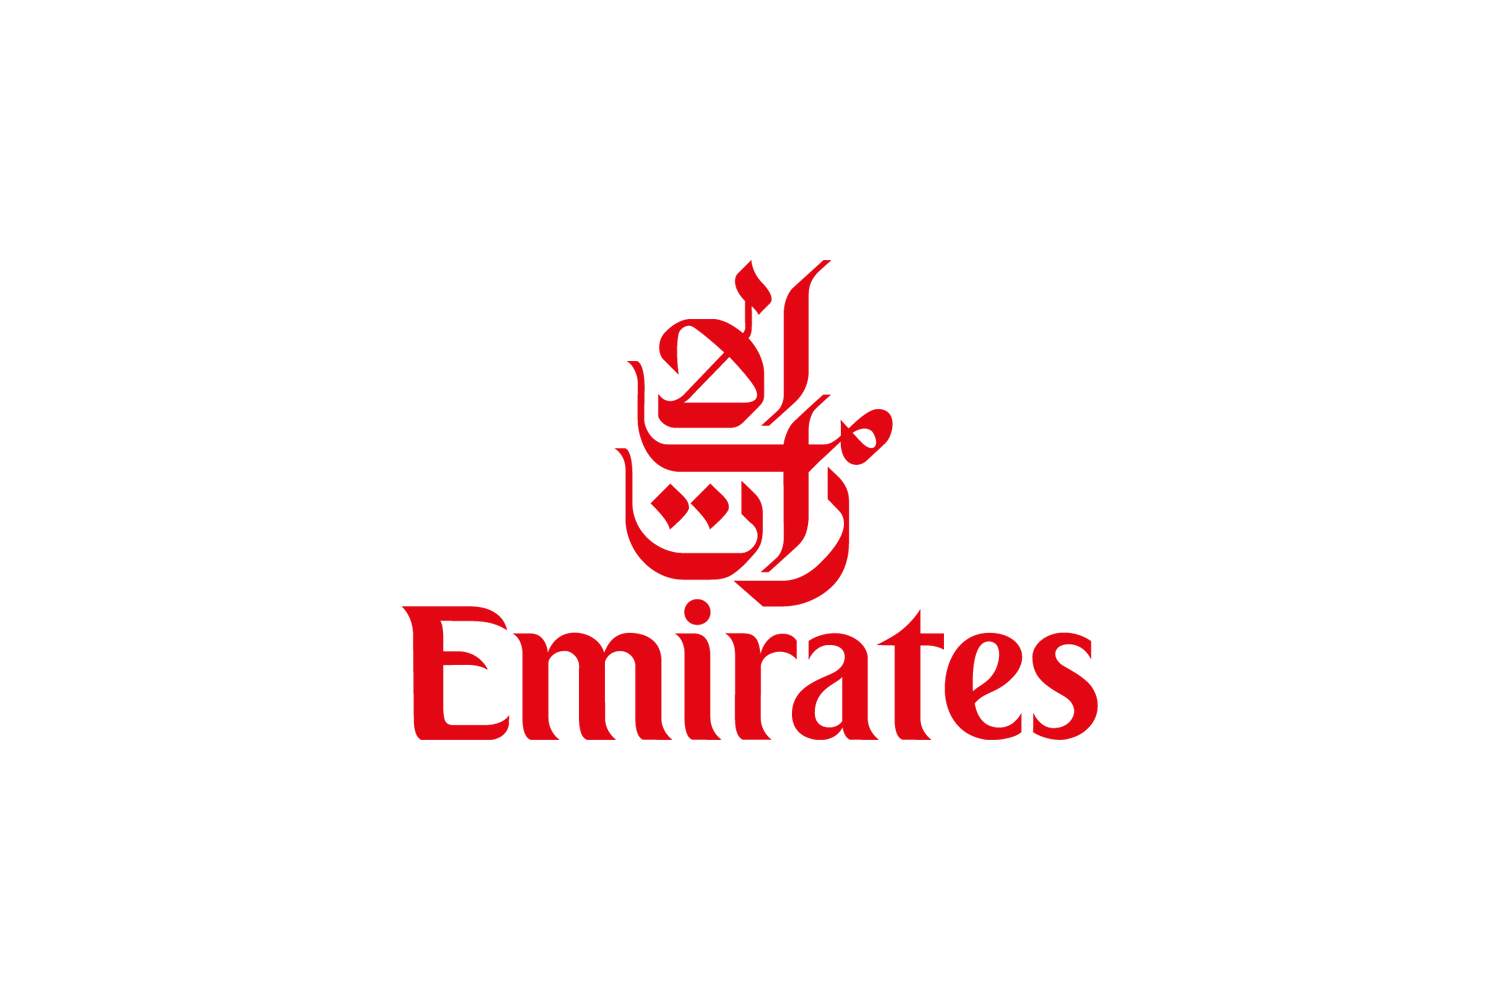 Emerates Logo - Emirates airlines Logos